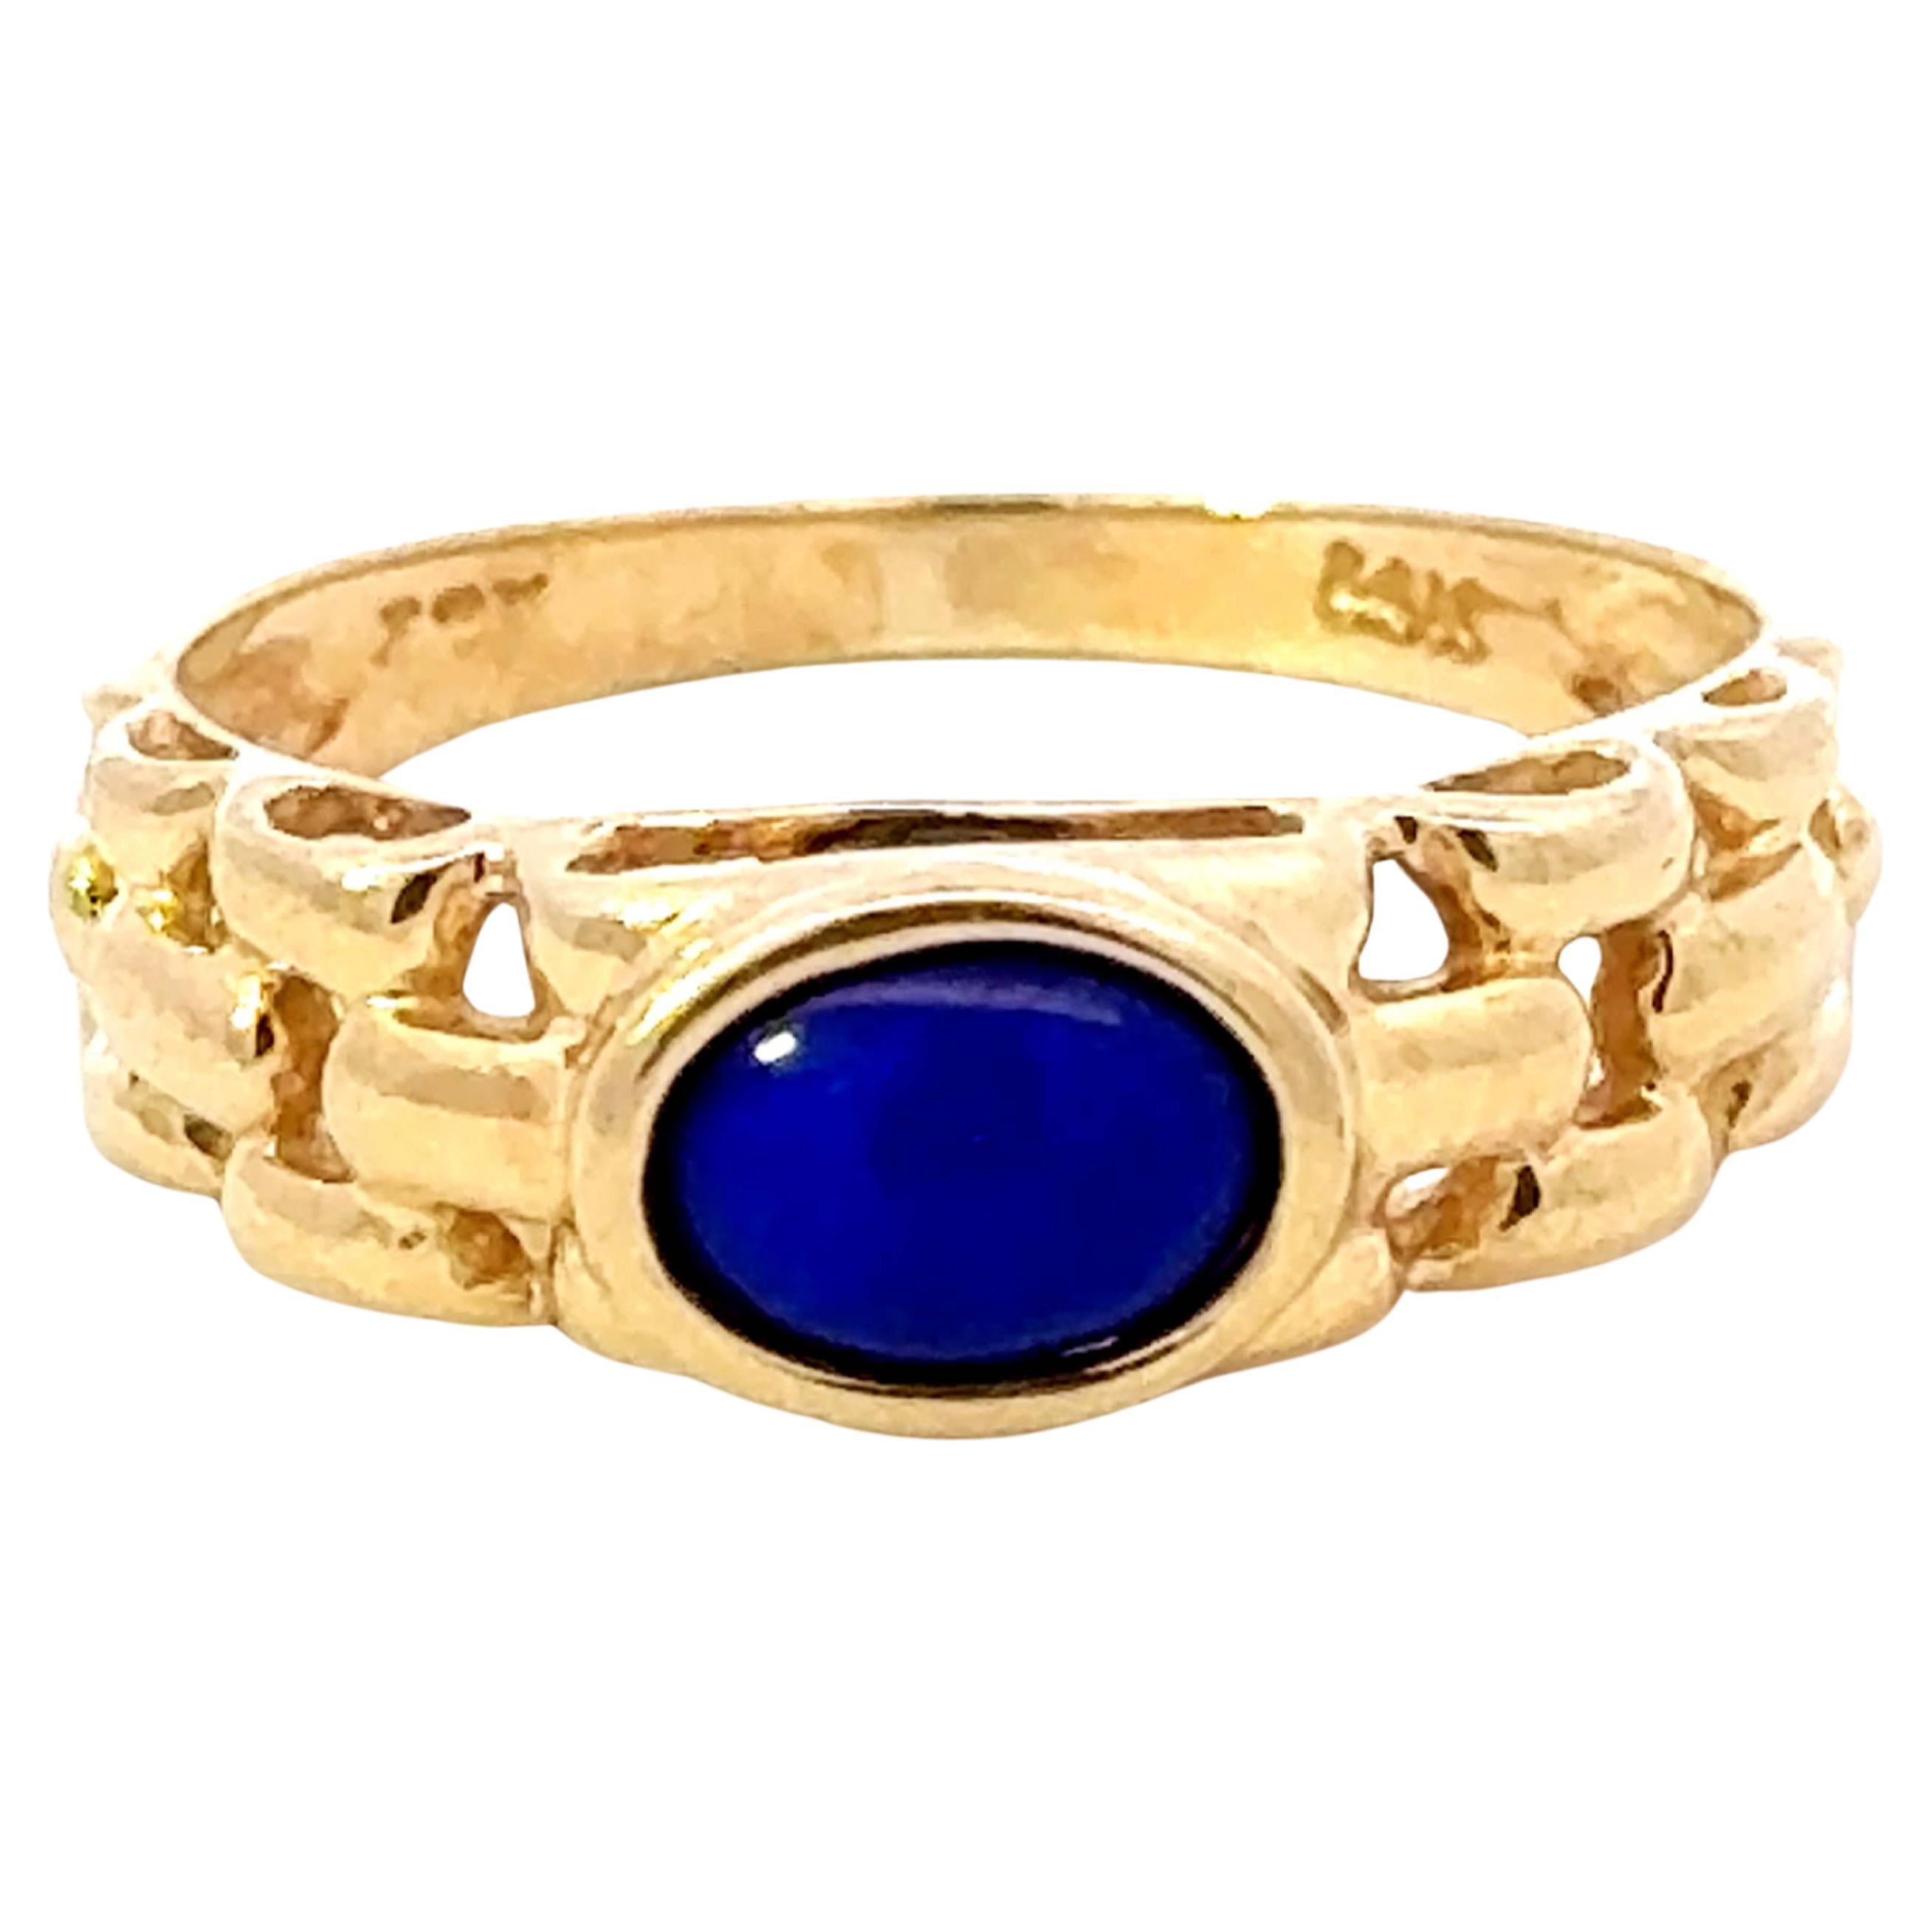 Oval Lapis Lazuli Band Ring 14k Yellow Gold